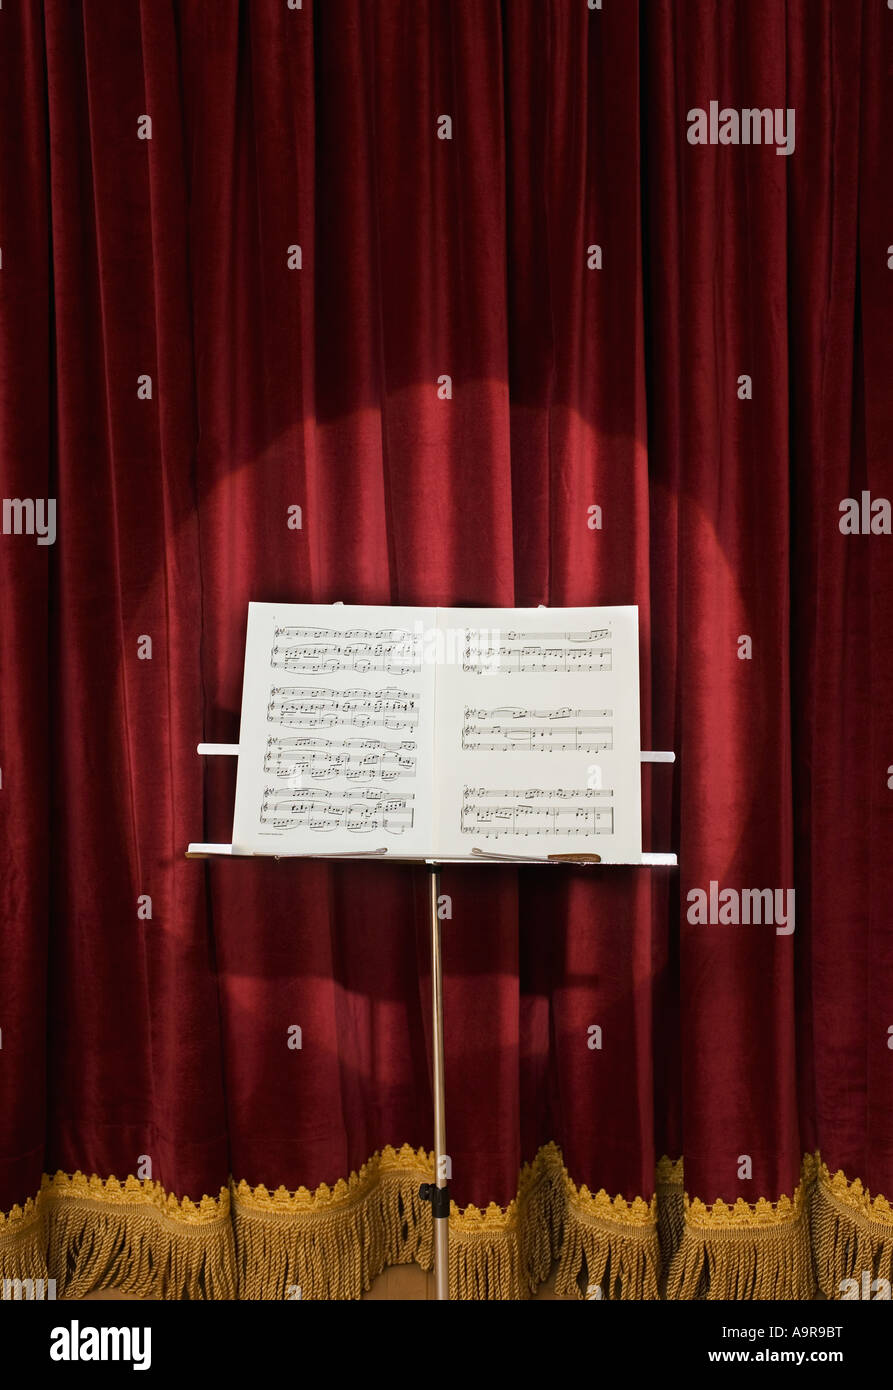 Spotlight on sheet music on stage Stock Photo